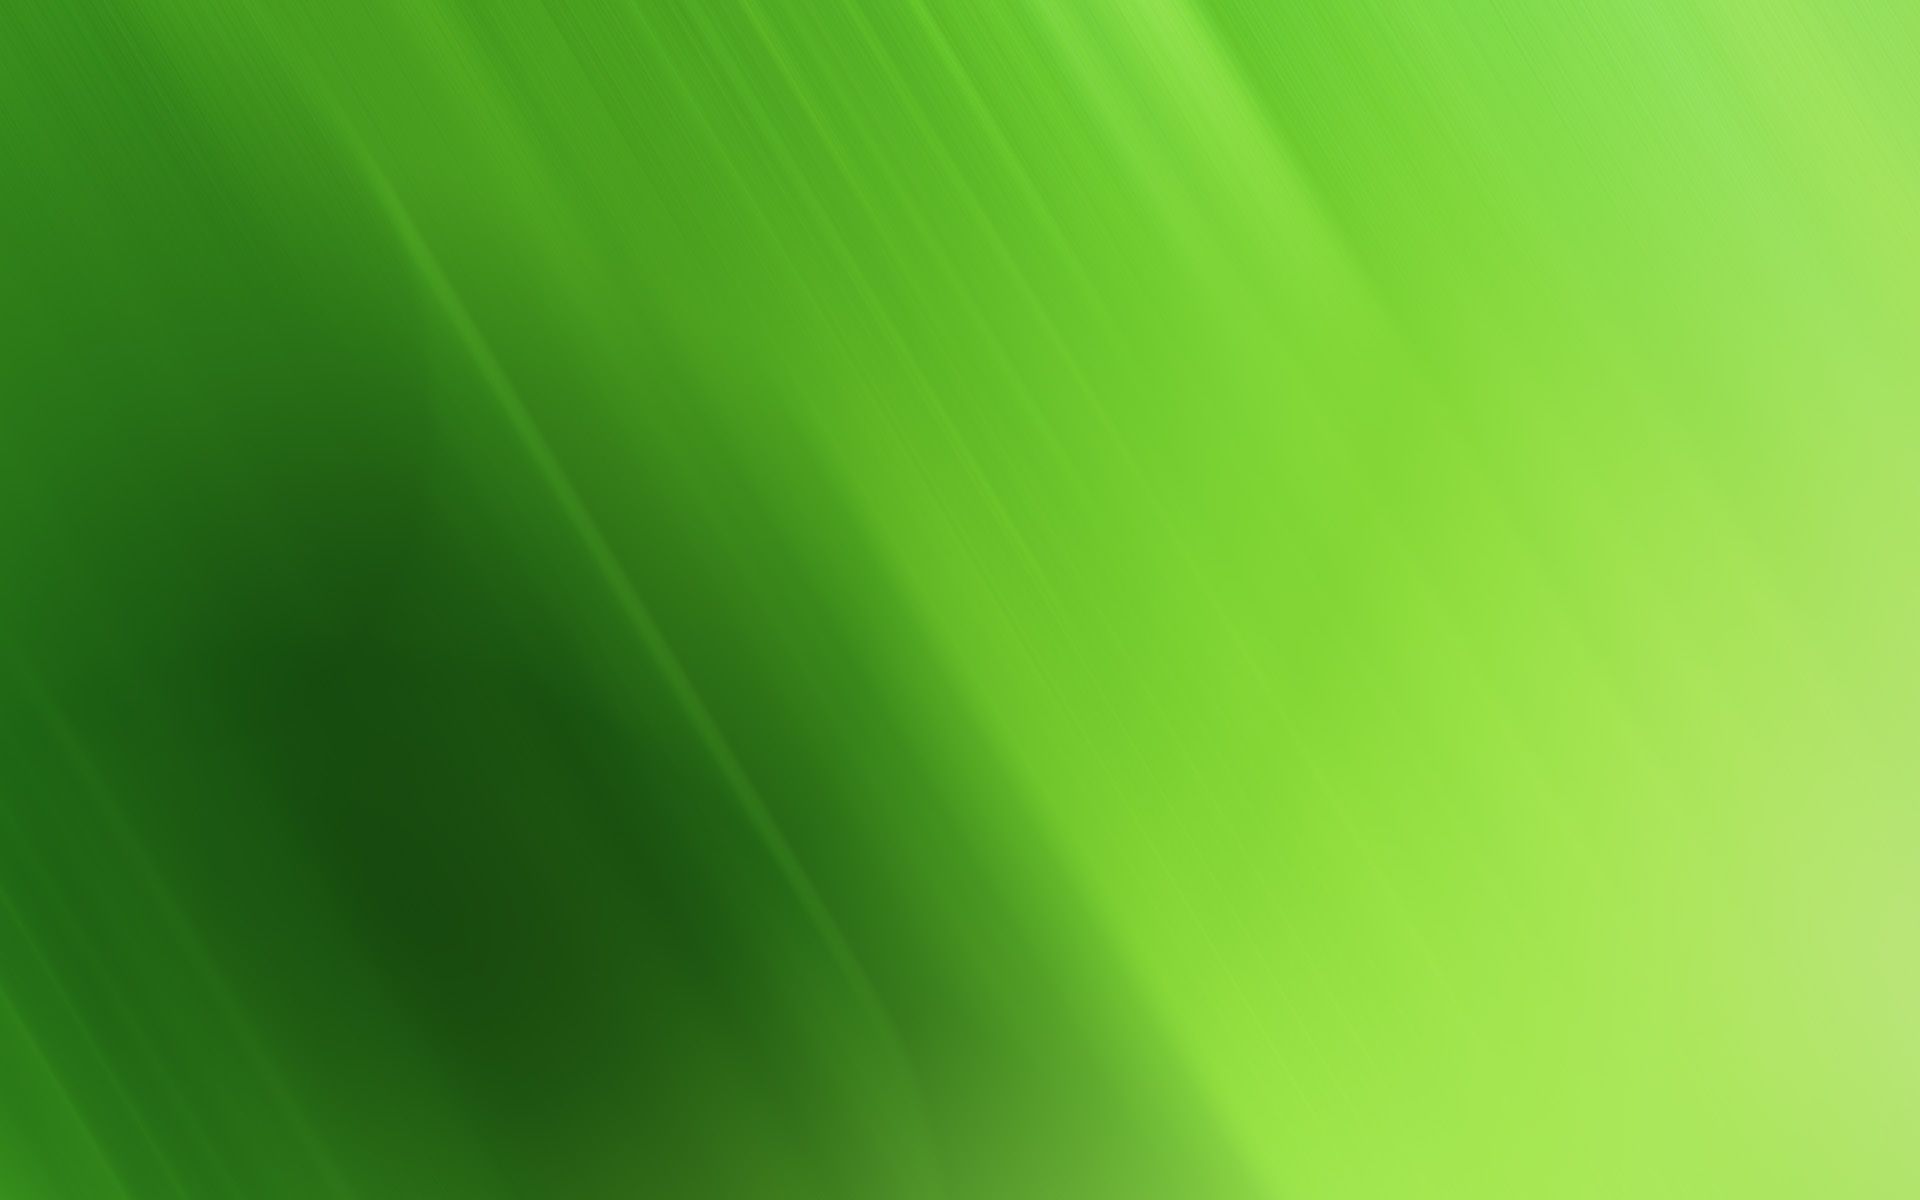 desktop-green-abstract-clean-backgrounds.jpg - waughrealty.com